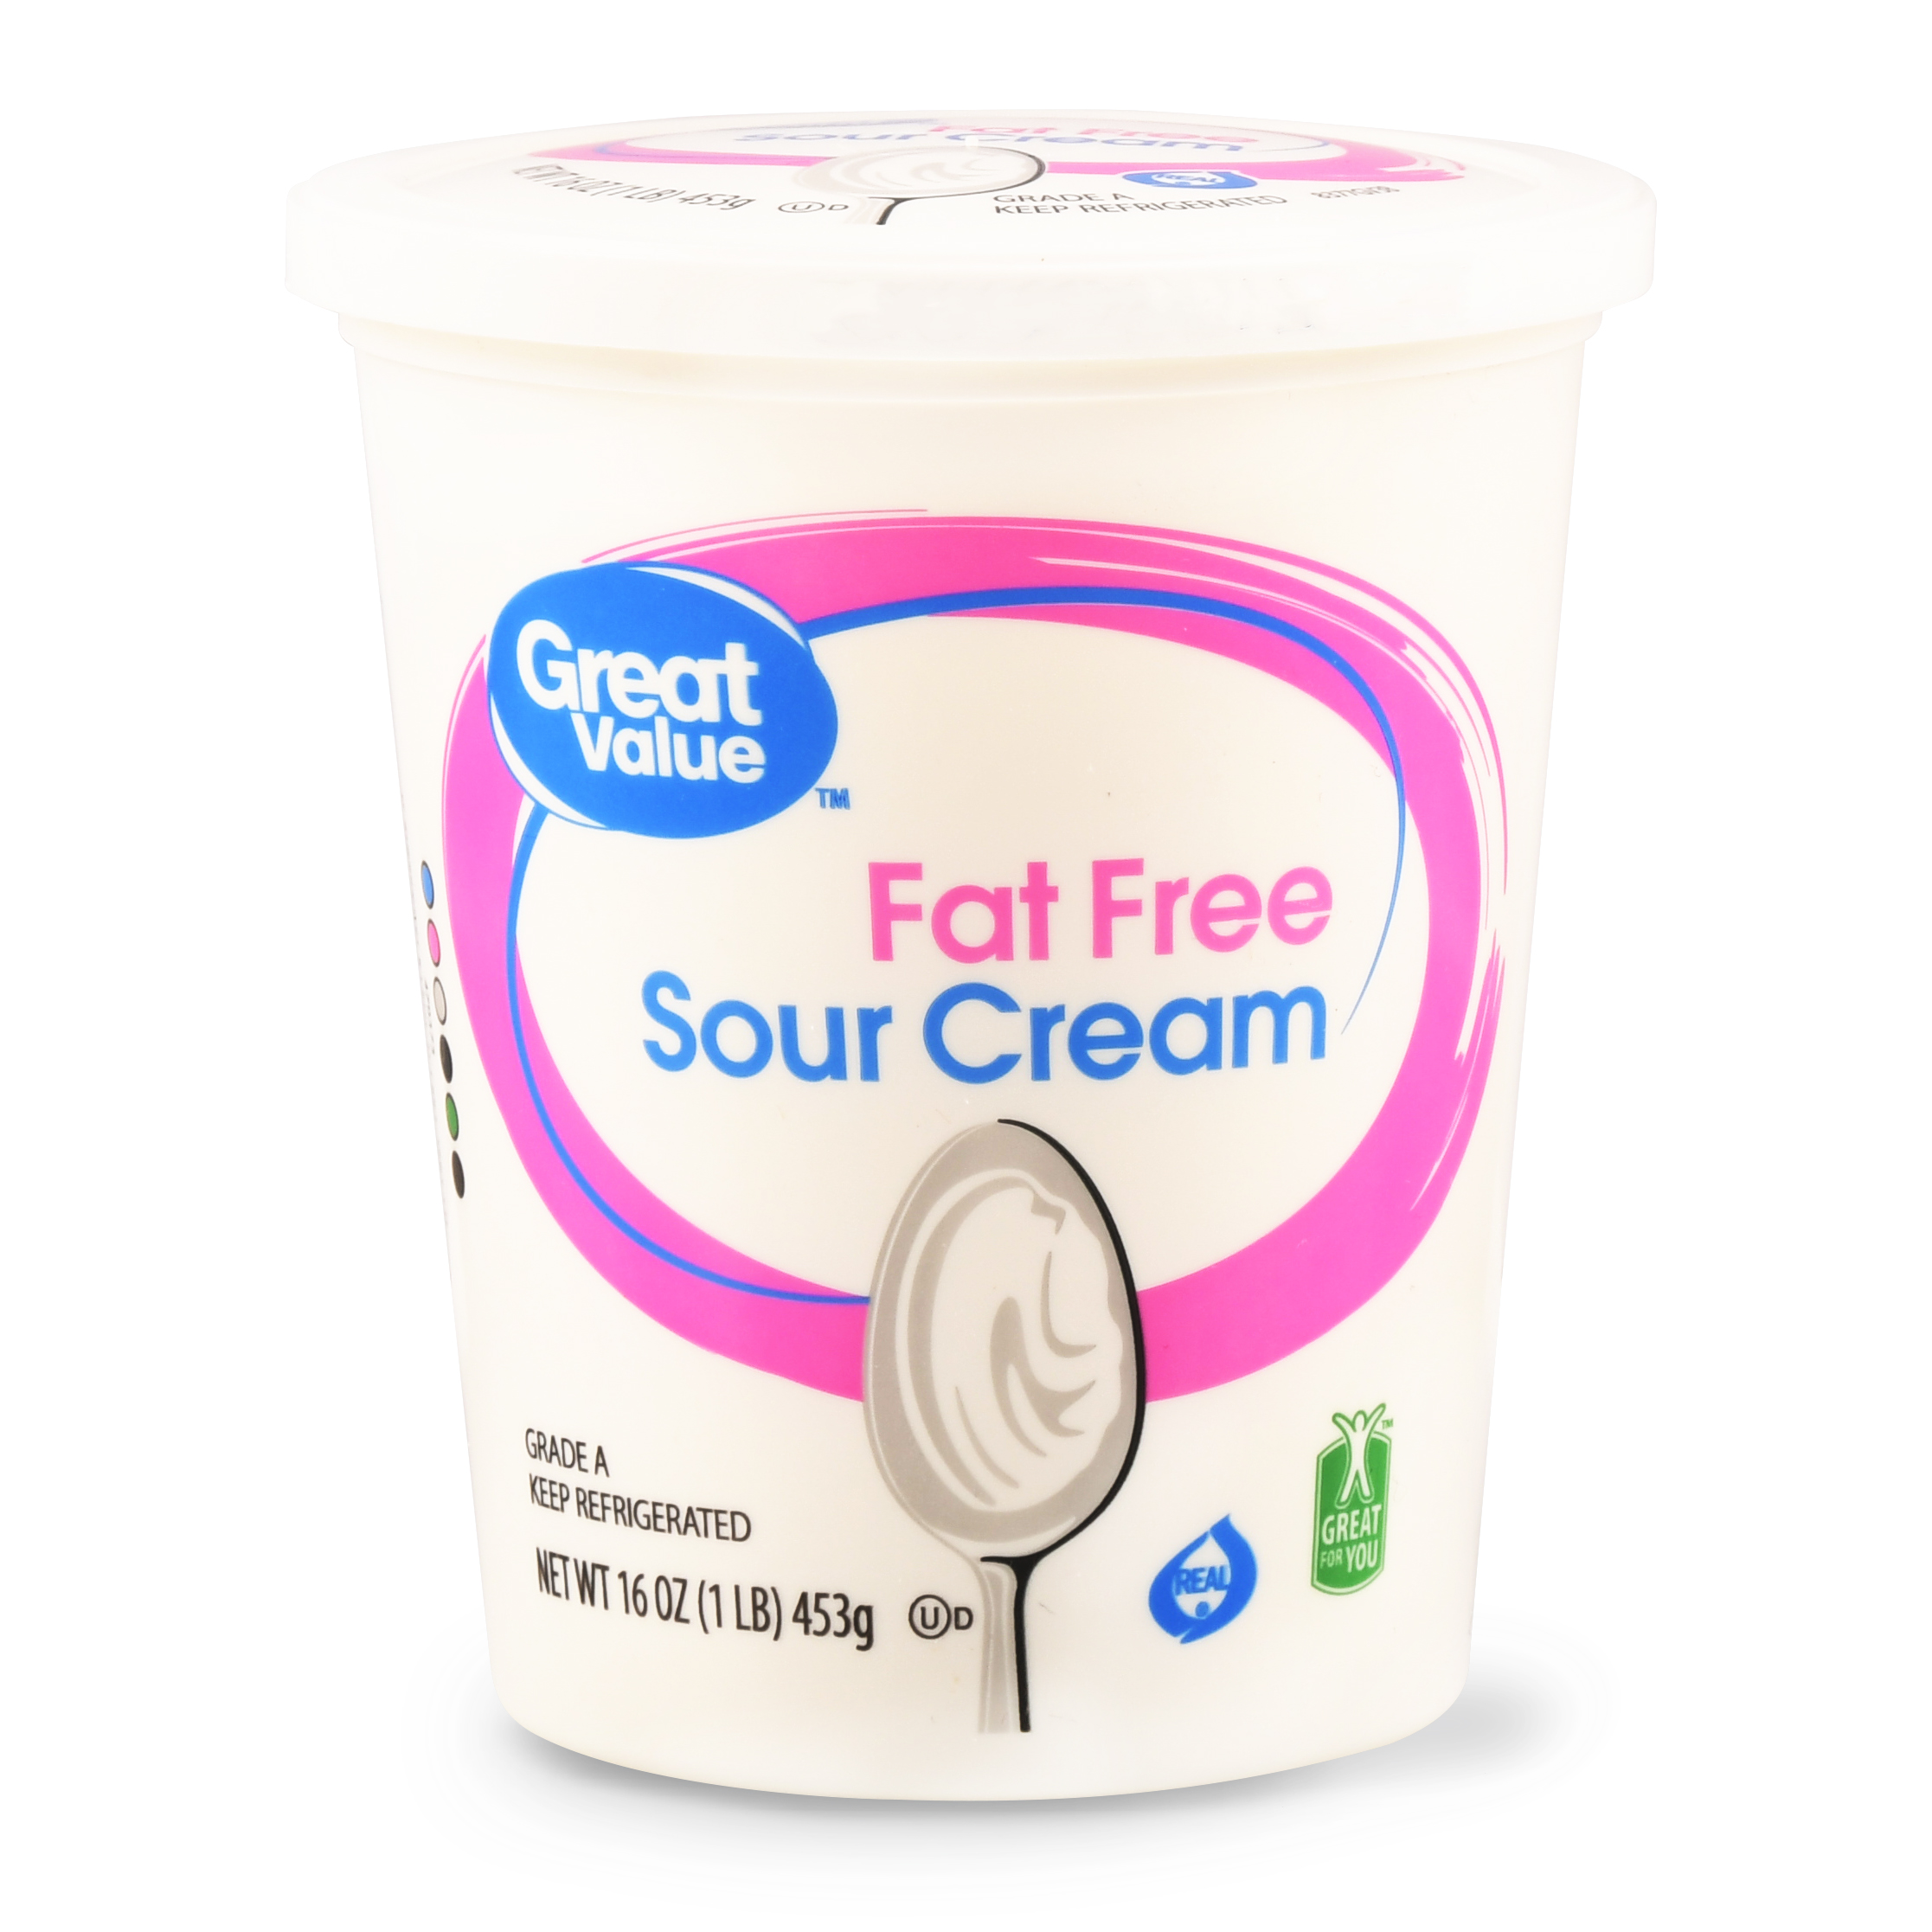 Great Value Grade a Fat Free Sour Cream, 16 Oz. Image